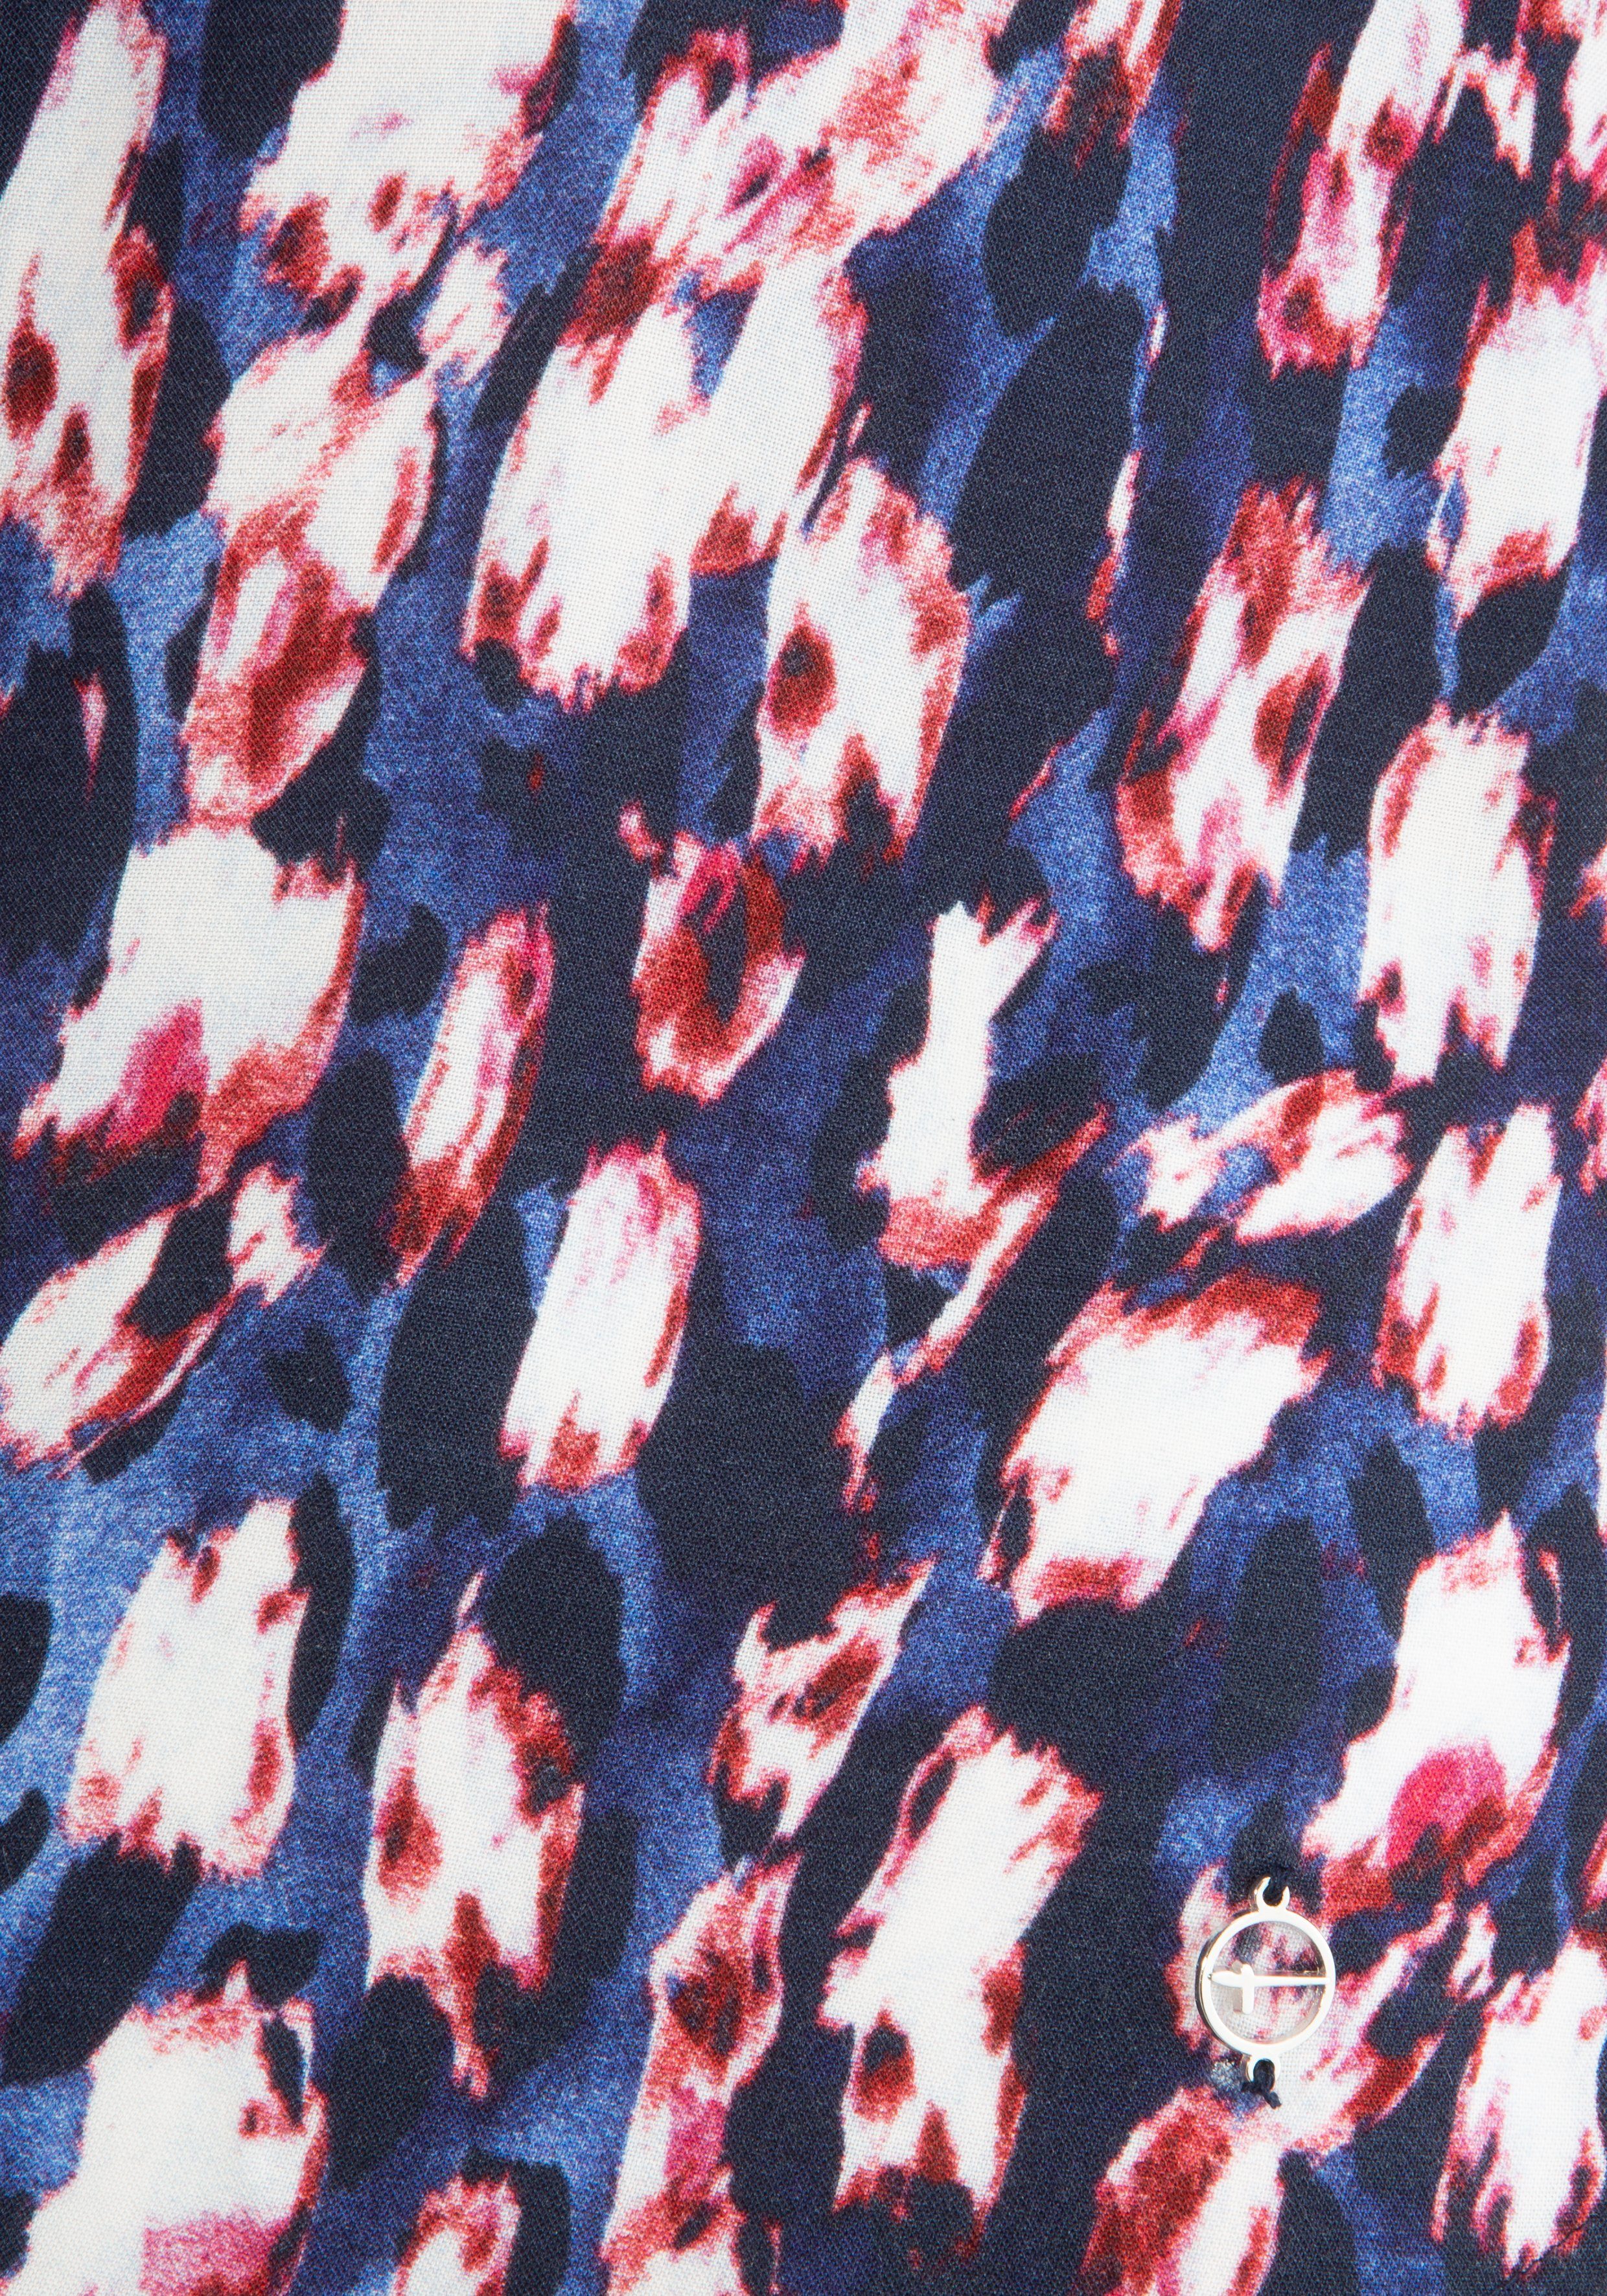 Tamaris Shirtbluse mit abgerundetem Saum NEUE KOLLEKTION - rot-blau-gemustert